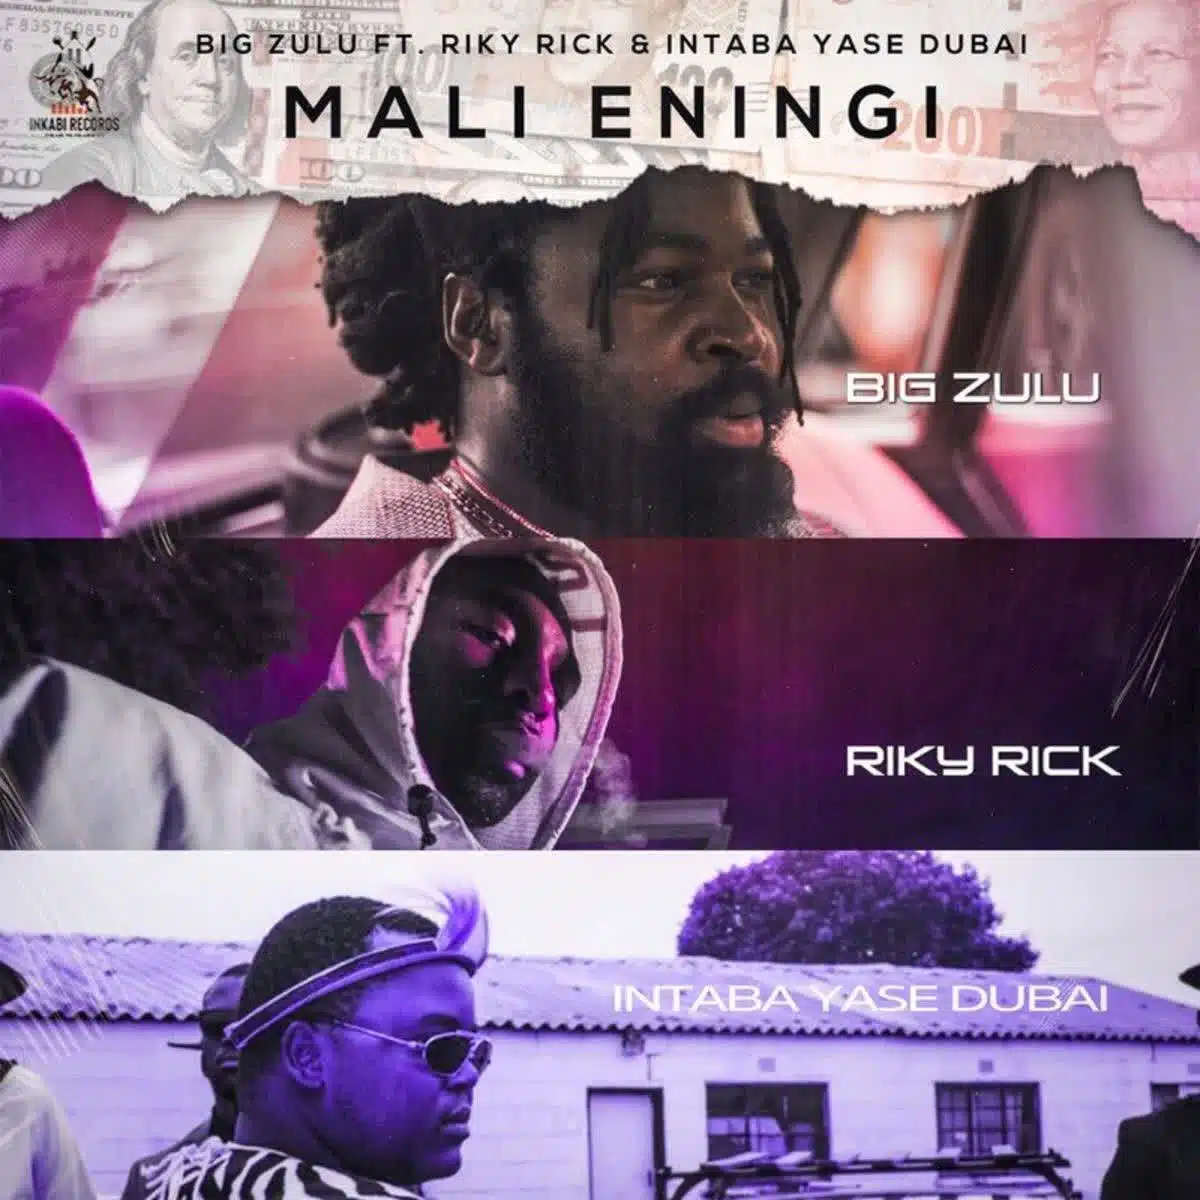 DOWNLOAD: Big Zulu Ft Riky Rick & Intaba Yase Dubai – “Mali Eningi” Video & Audio Mp3